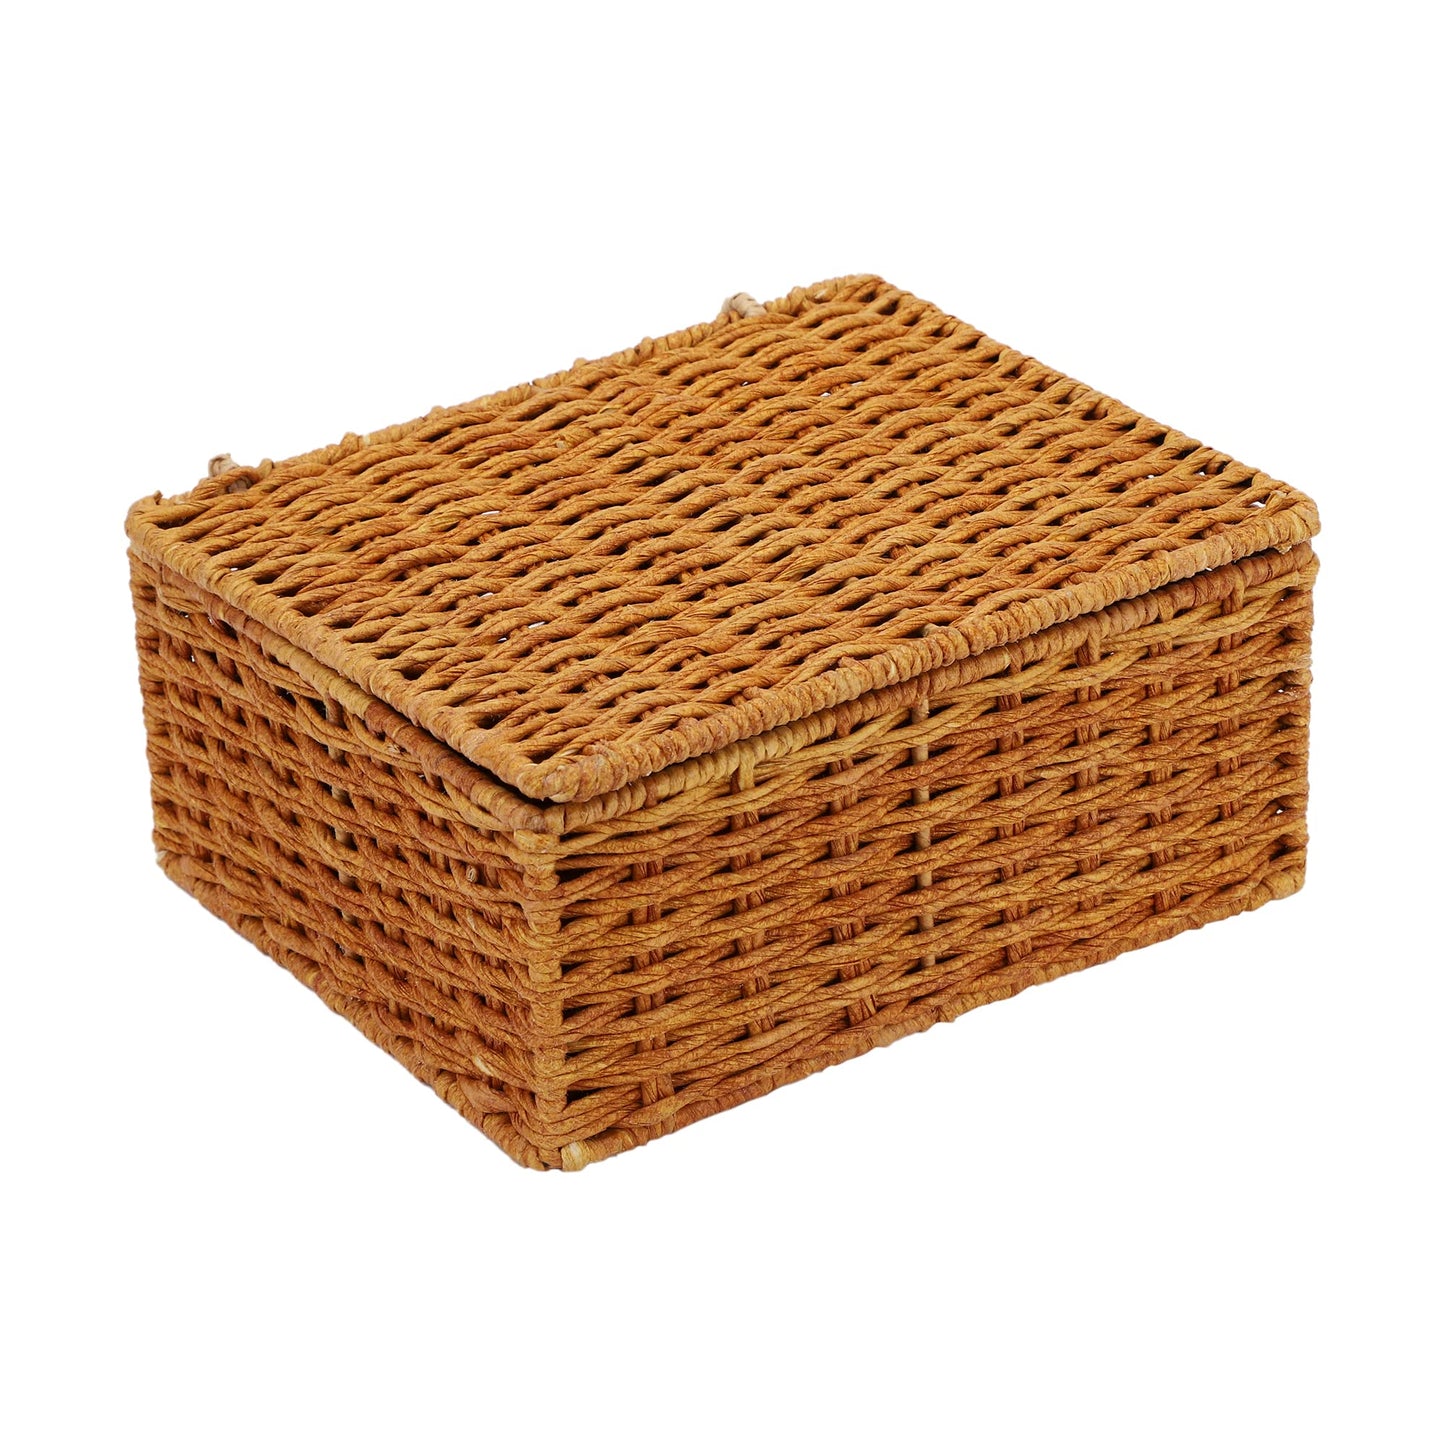 AKWAY wicker water hyacinth kauna grass bamboo cane Storage Basket with Lids Rectangular Handwoven Wicker Organizer Baskets Desktop Storage Box Rattan Container Desk Basket (Brown)(10"L x 8"W x 4"H)- Akway